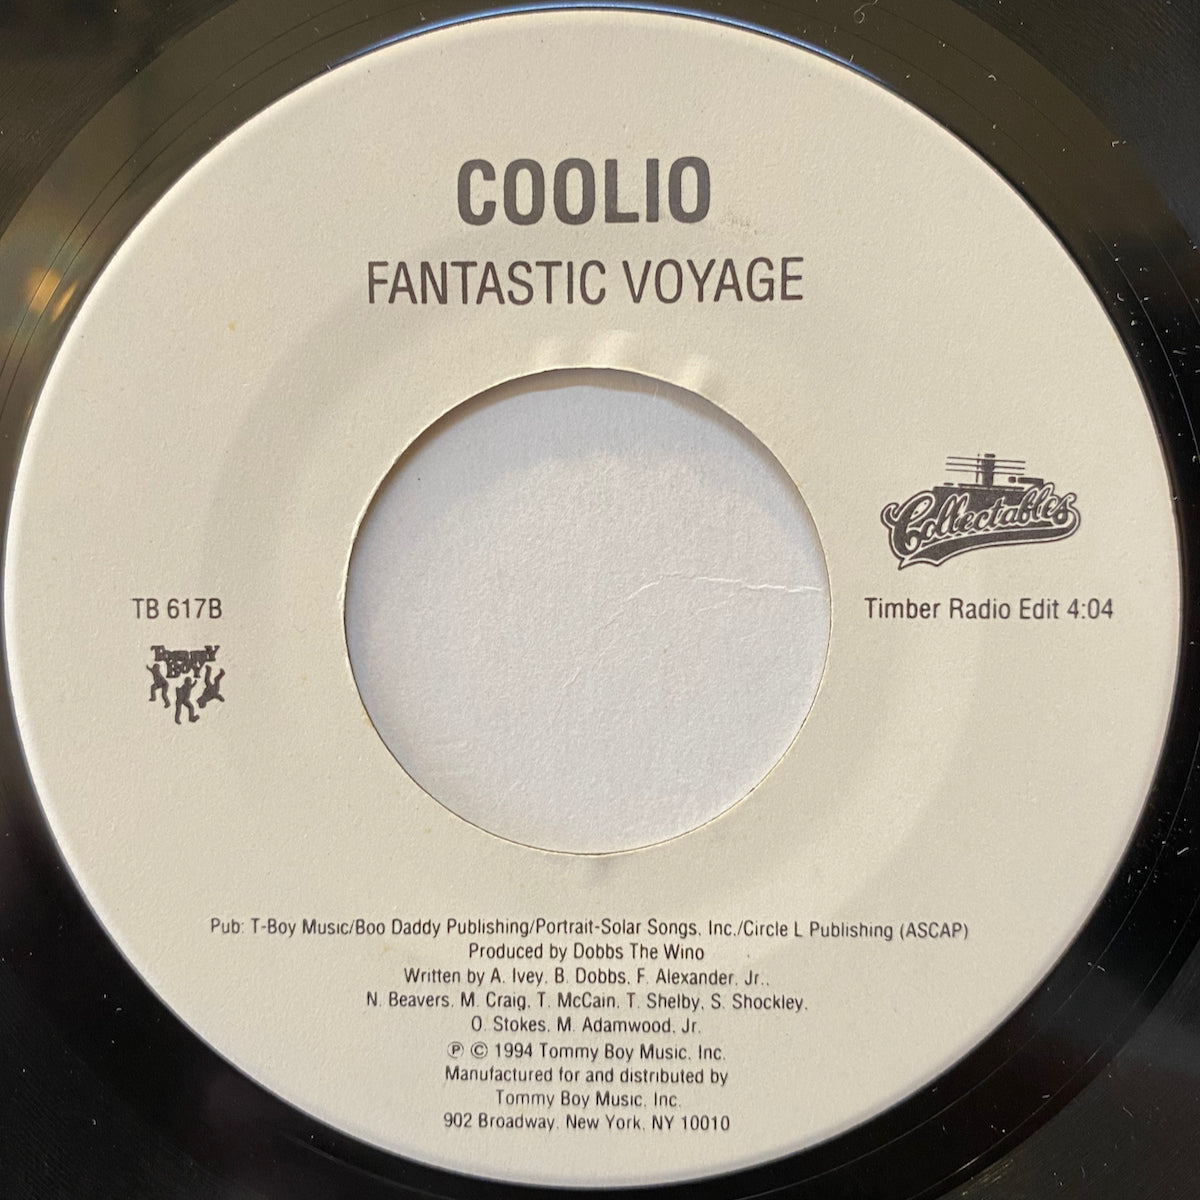 coolio fantastic voyage release date